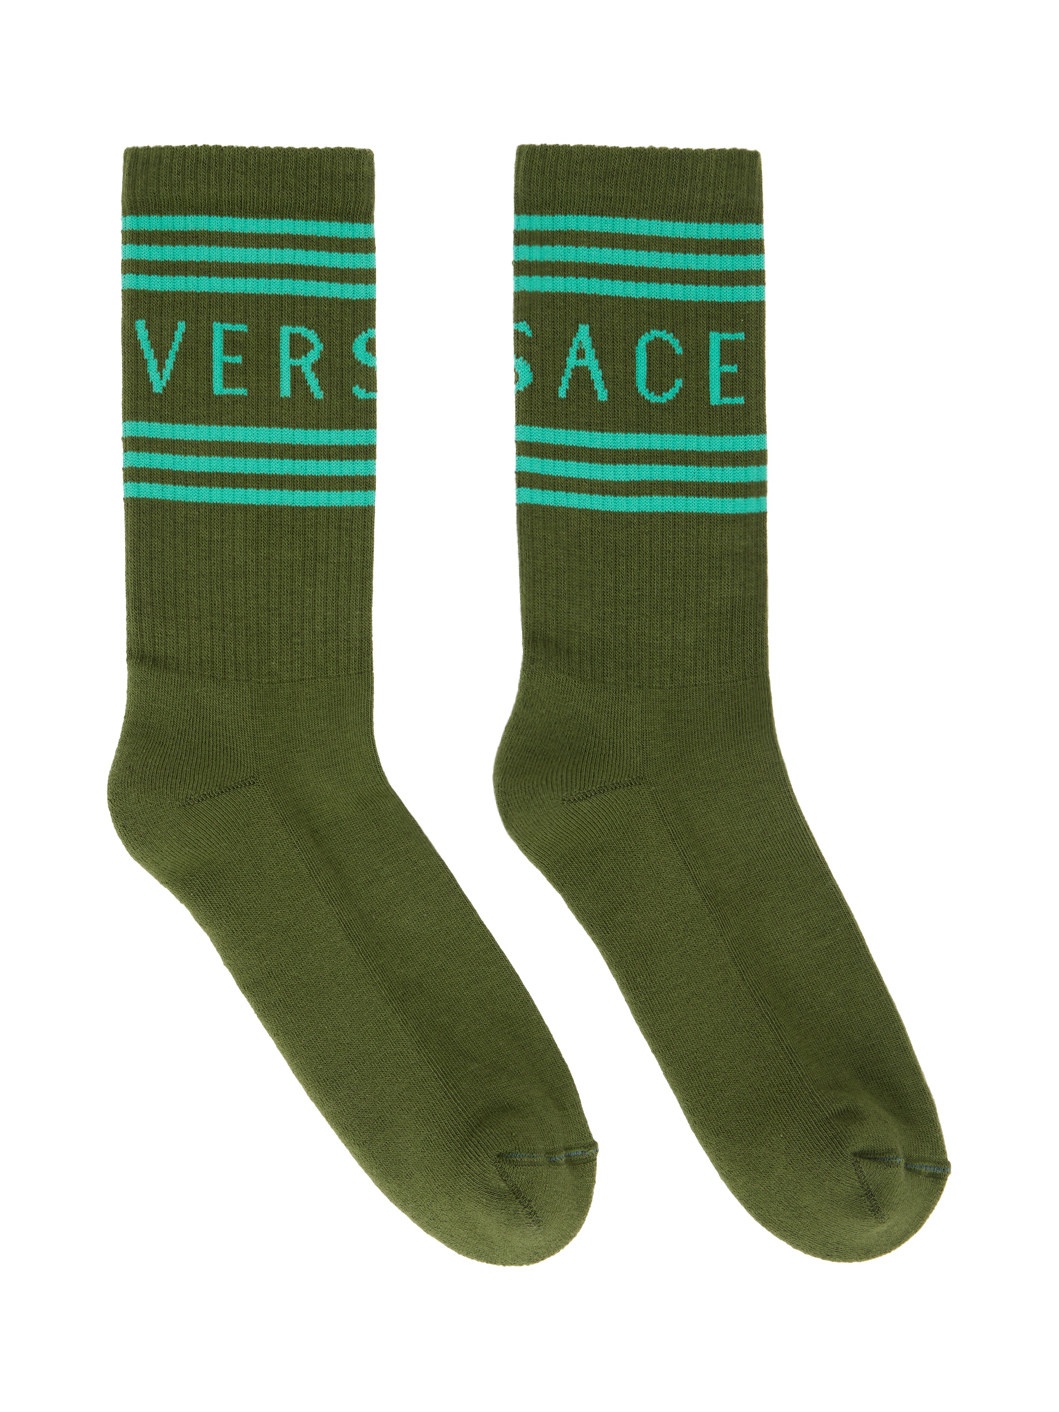 Green Athletic Socks - 1